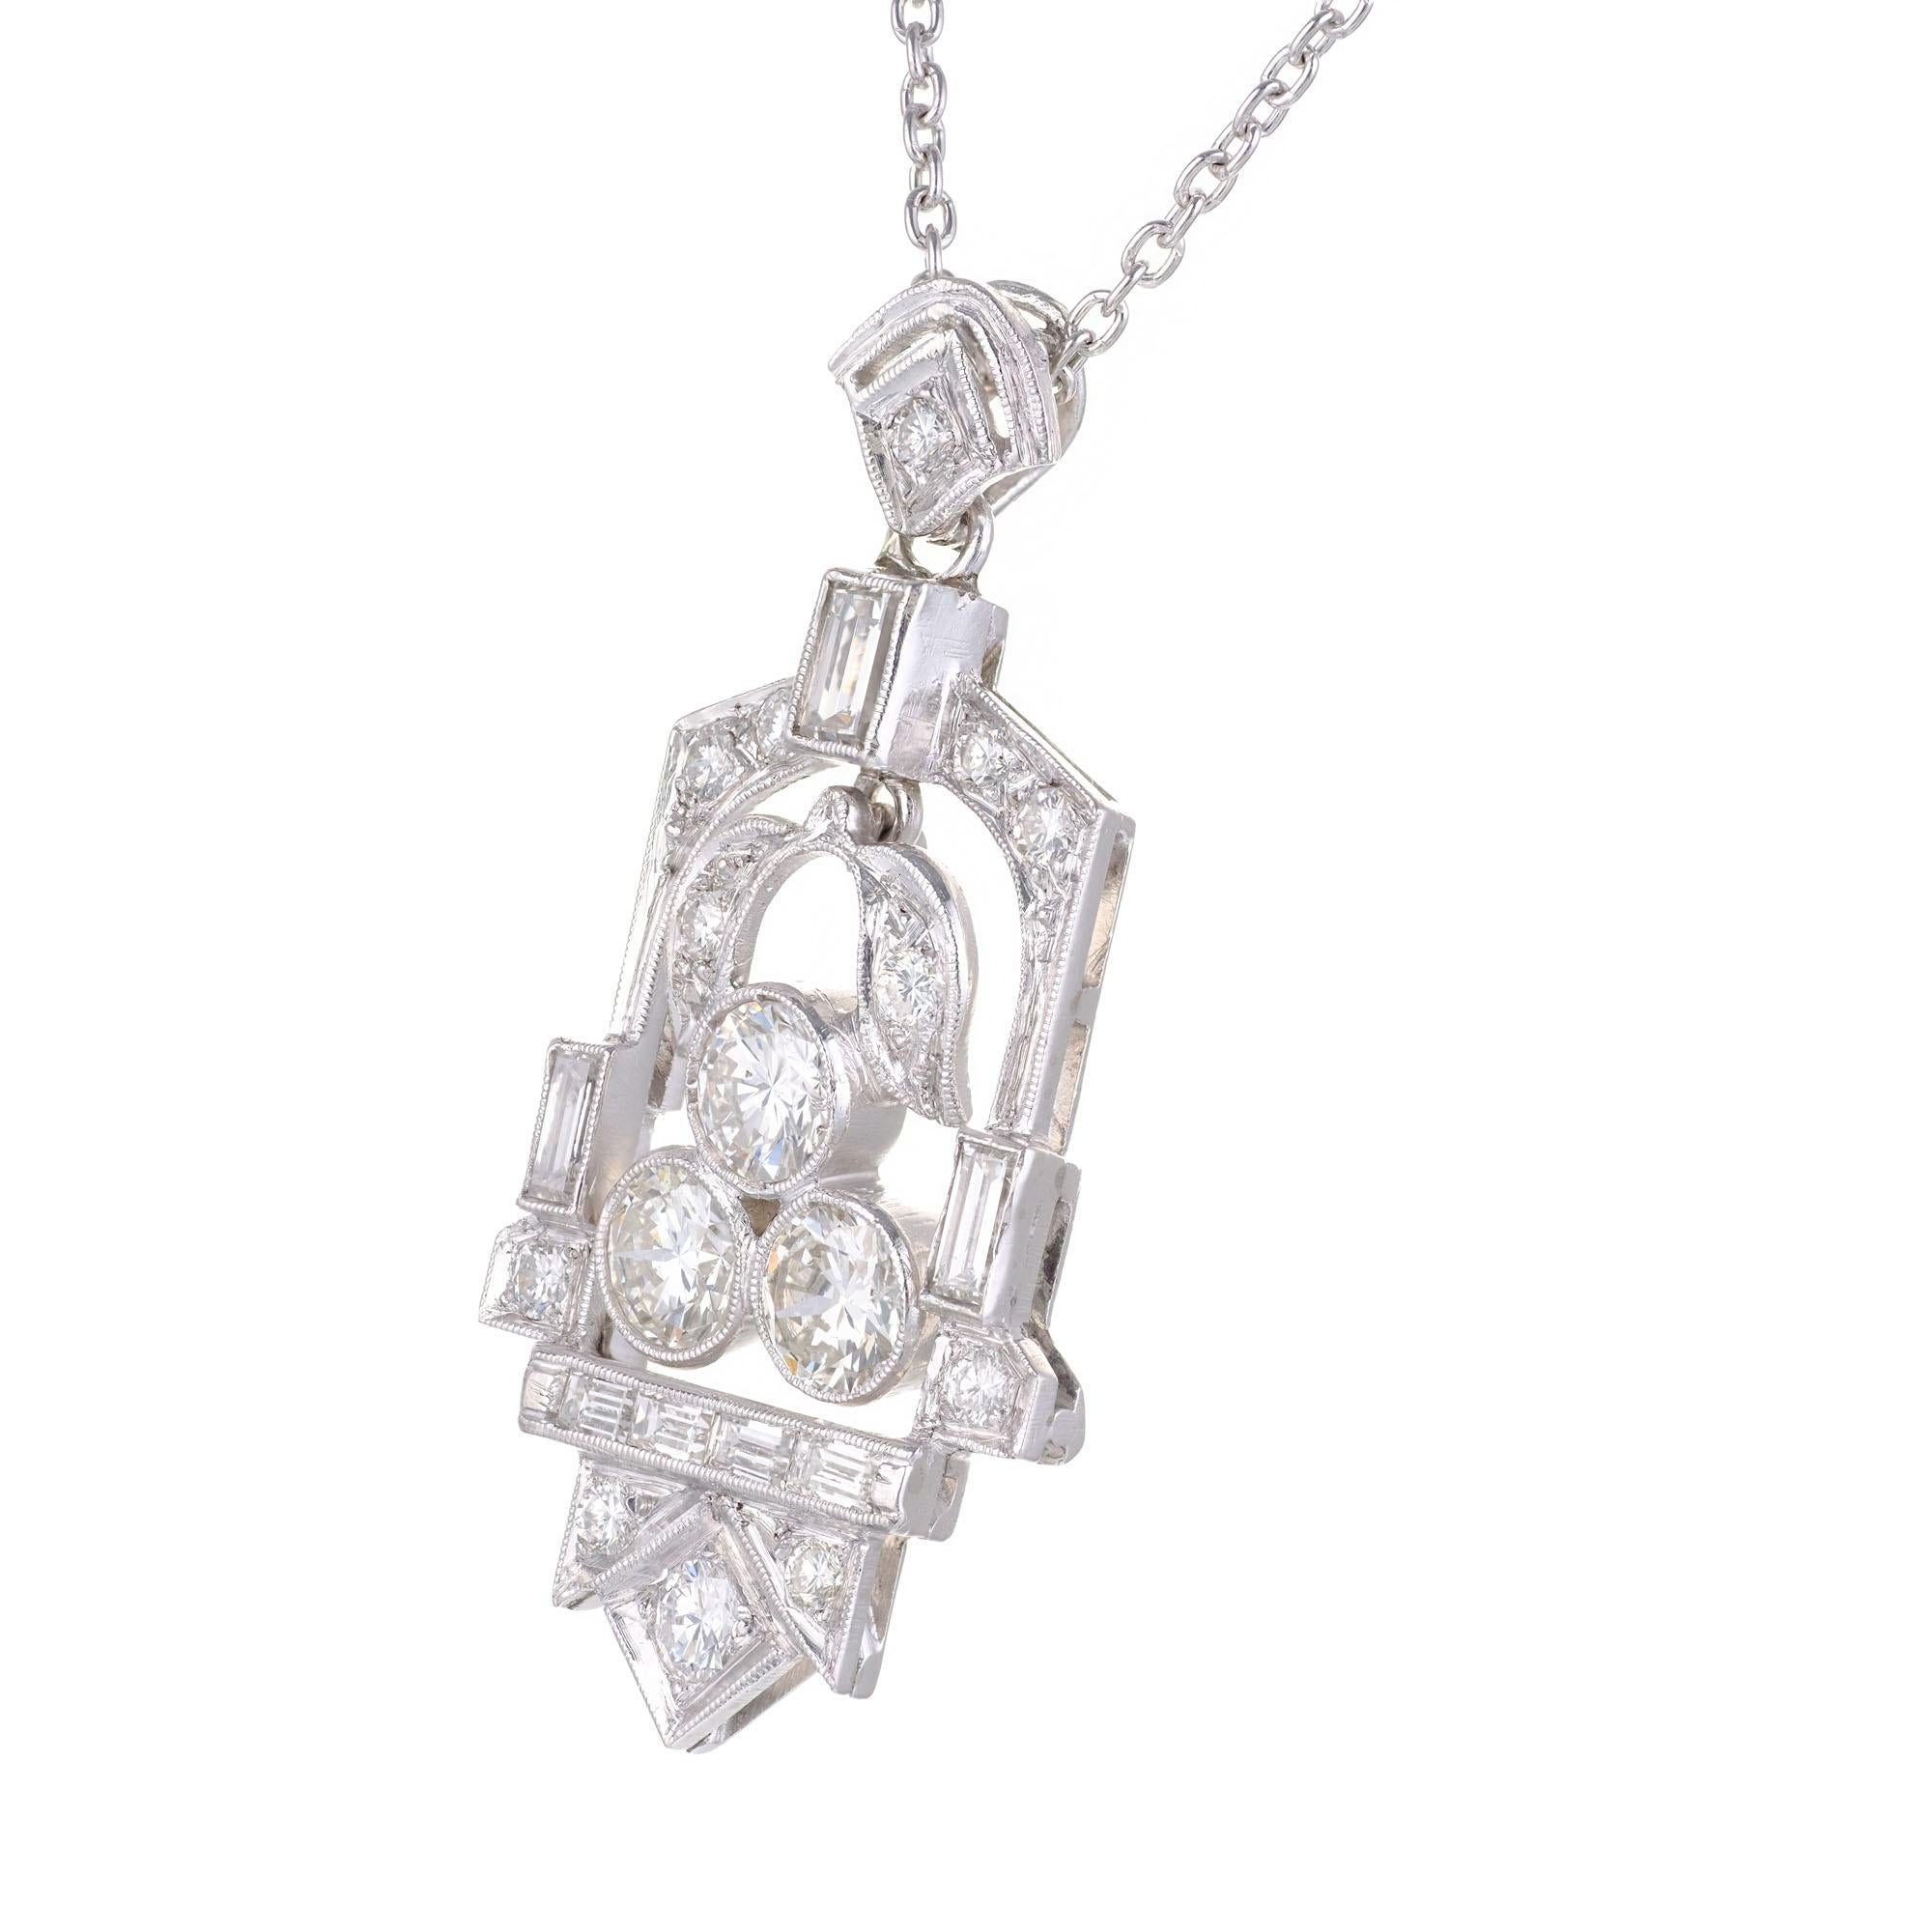 Art Deco 1930's diamond pendant necklace. 22 transitioanl and baguette cut diamonds on a 16 inch chain. 

12 transitional cut diamonds, H-I VS-SI approx. .35cts
7 straight cut baguettes, H VA approx. .30cts
3 transitional cut diamonds, H-I VS-SI